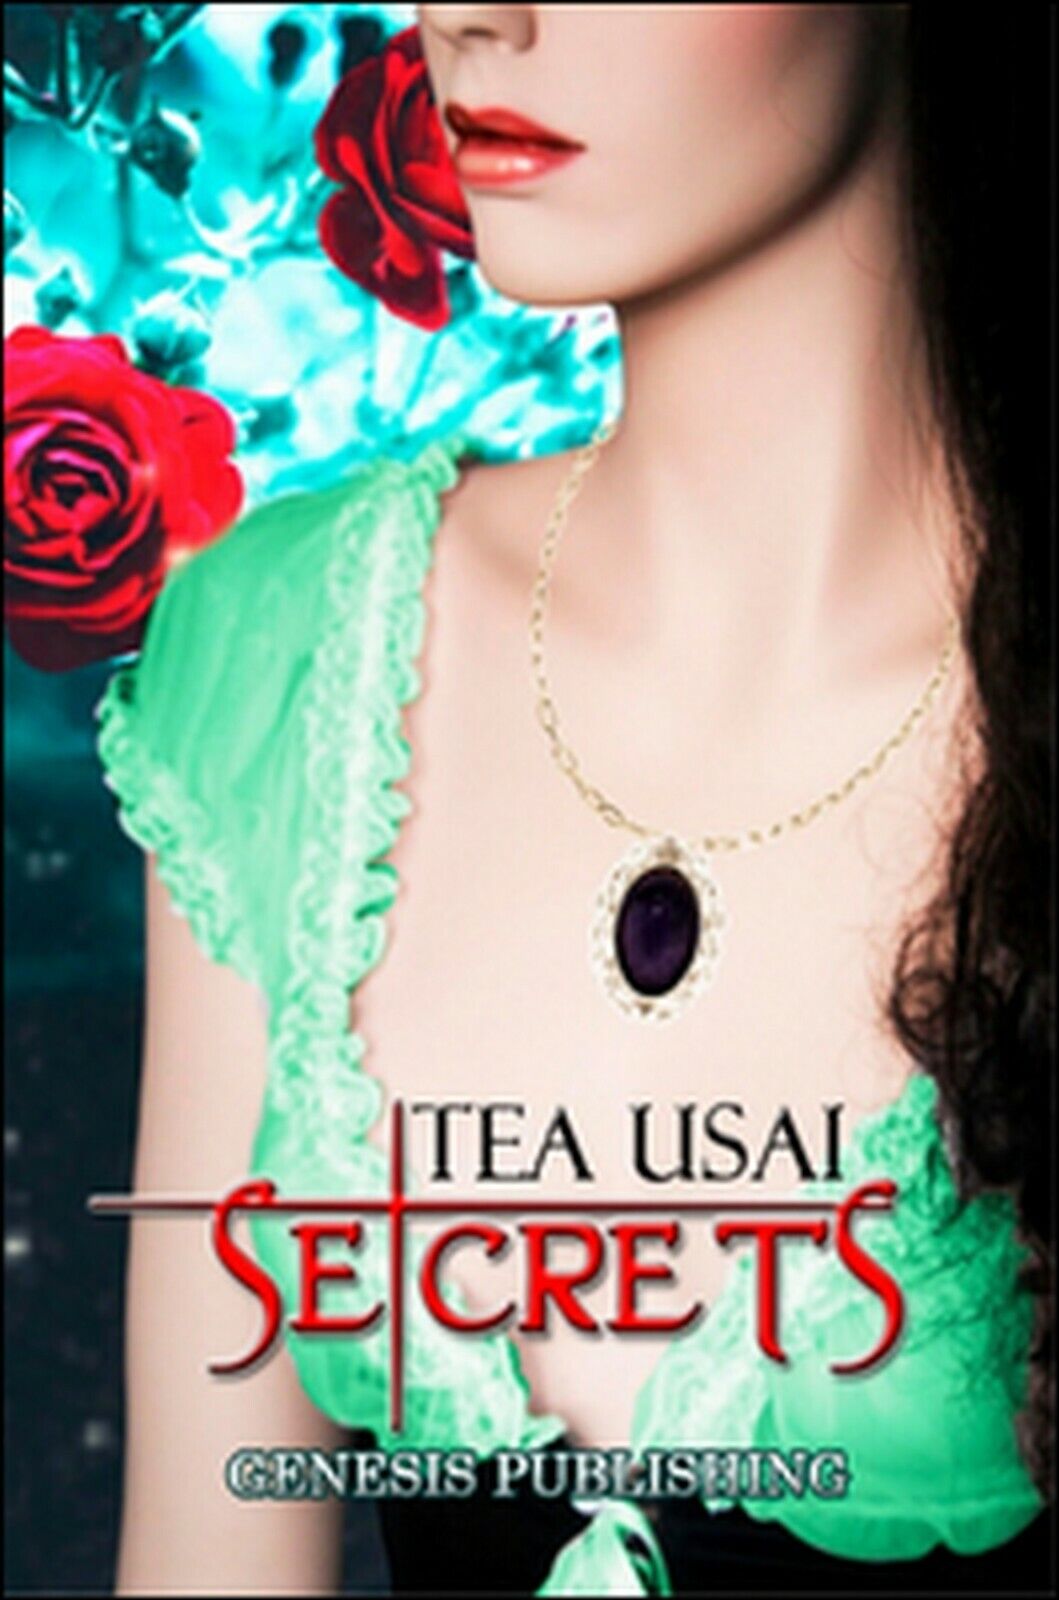 Secrets  di Tea Usai,  2016,  Genesis Publishing